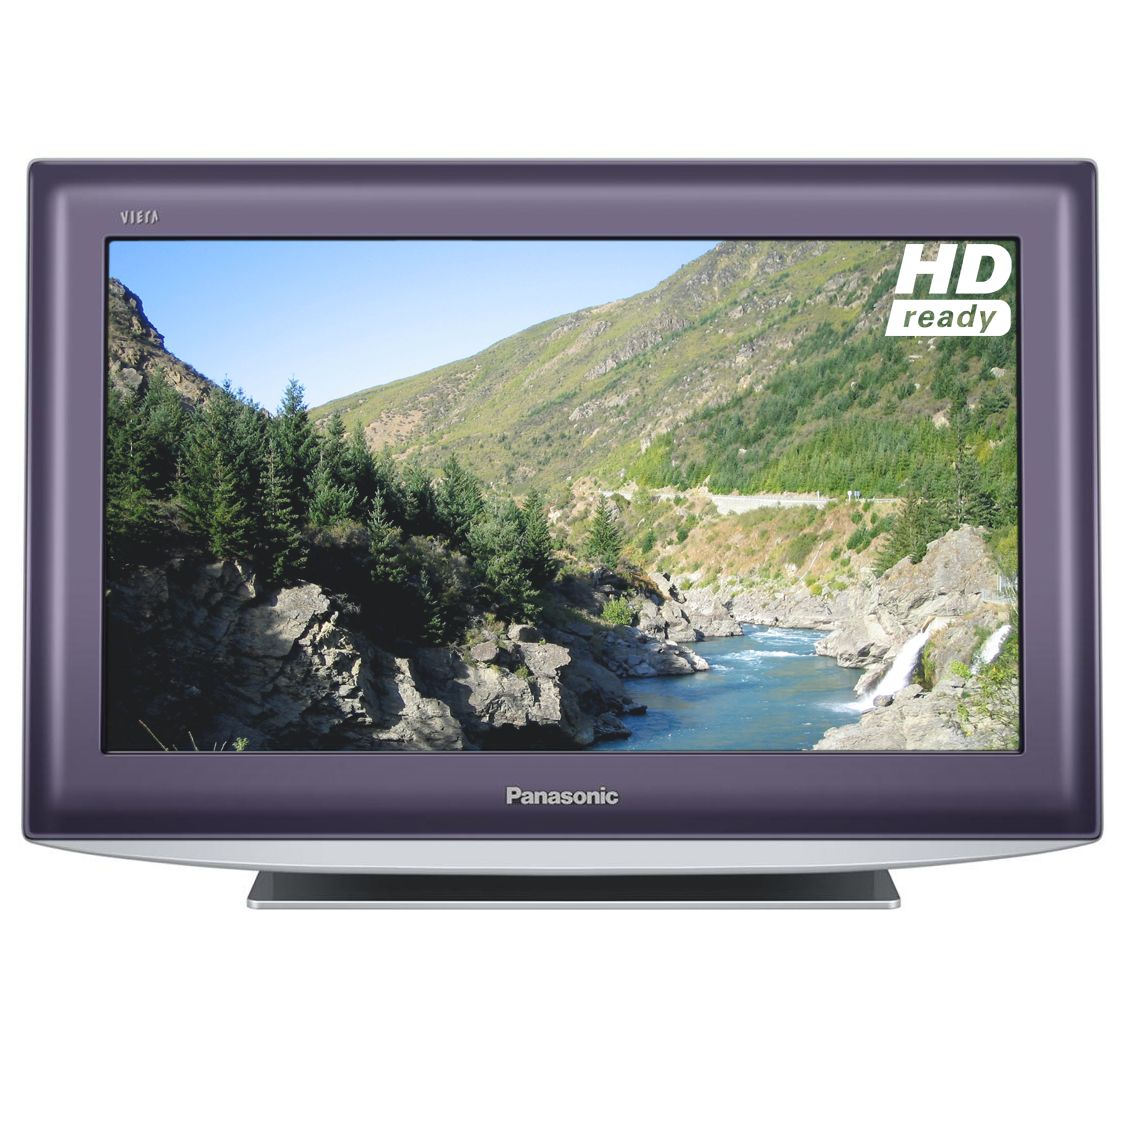 Panasonic Viera TX-L19D28BP LED HD Ready Digital Television, 19 Inch, Purple at John Lewis